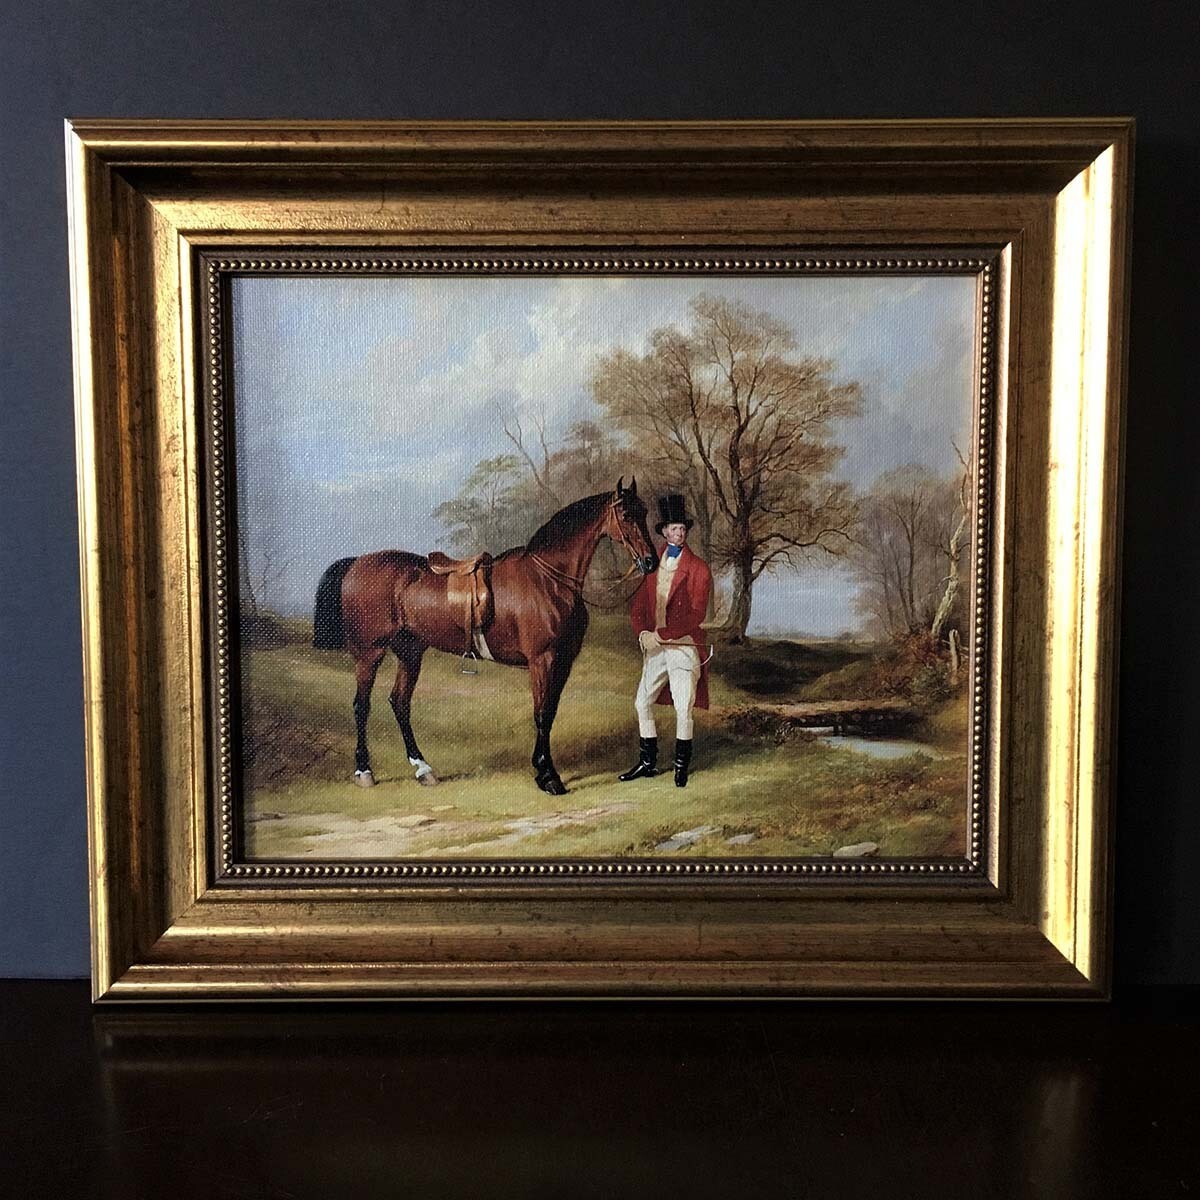 Saddled Hunter Equestrian Themed Framed Canvas